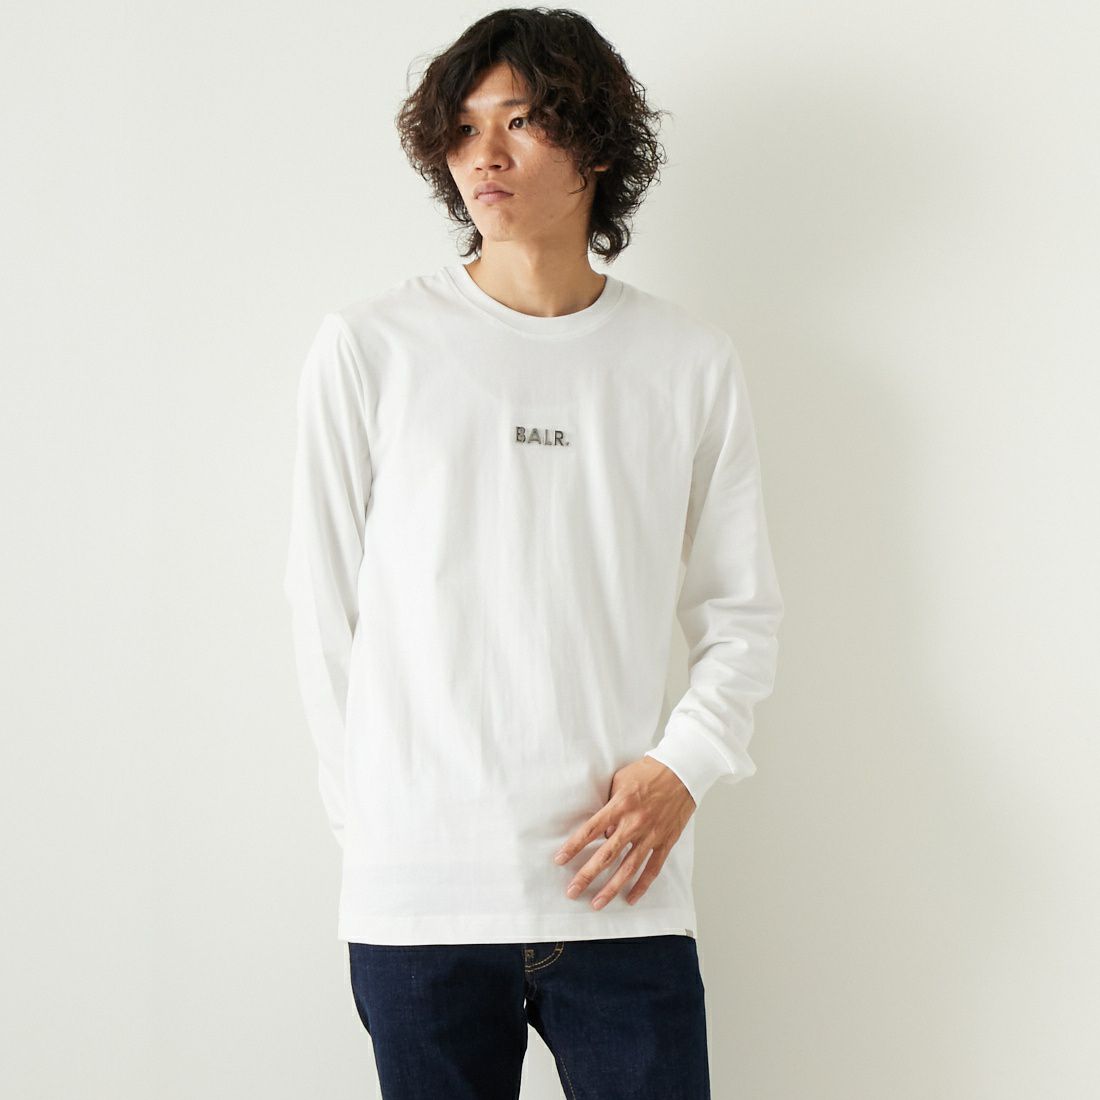 BALR. ロングTシャツ サイズL 新品 ホワイト[B1111.1044] - veltexx.com